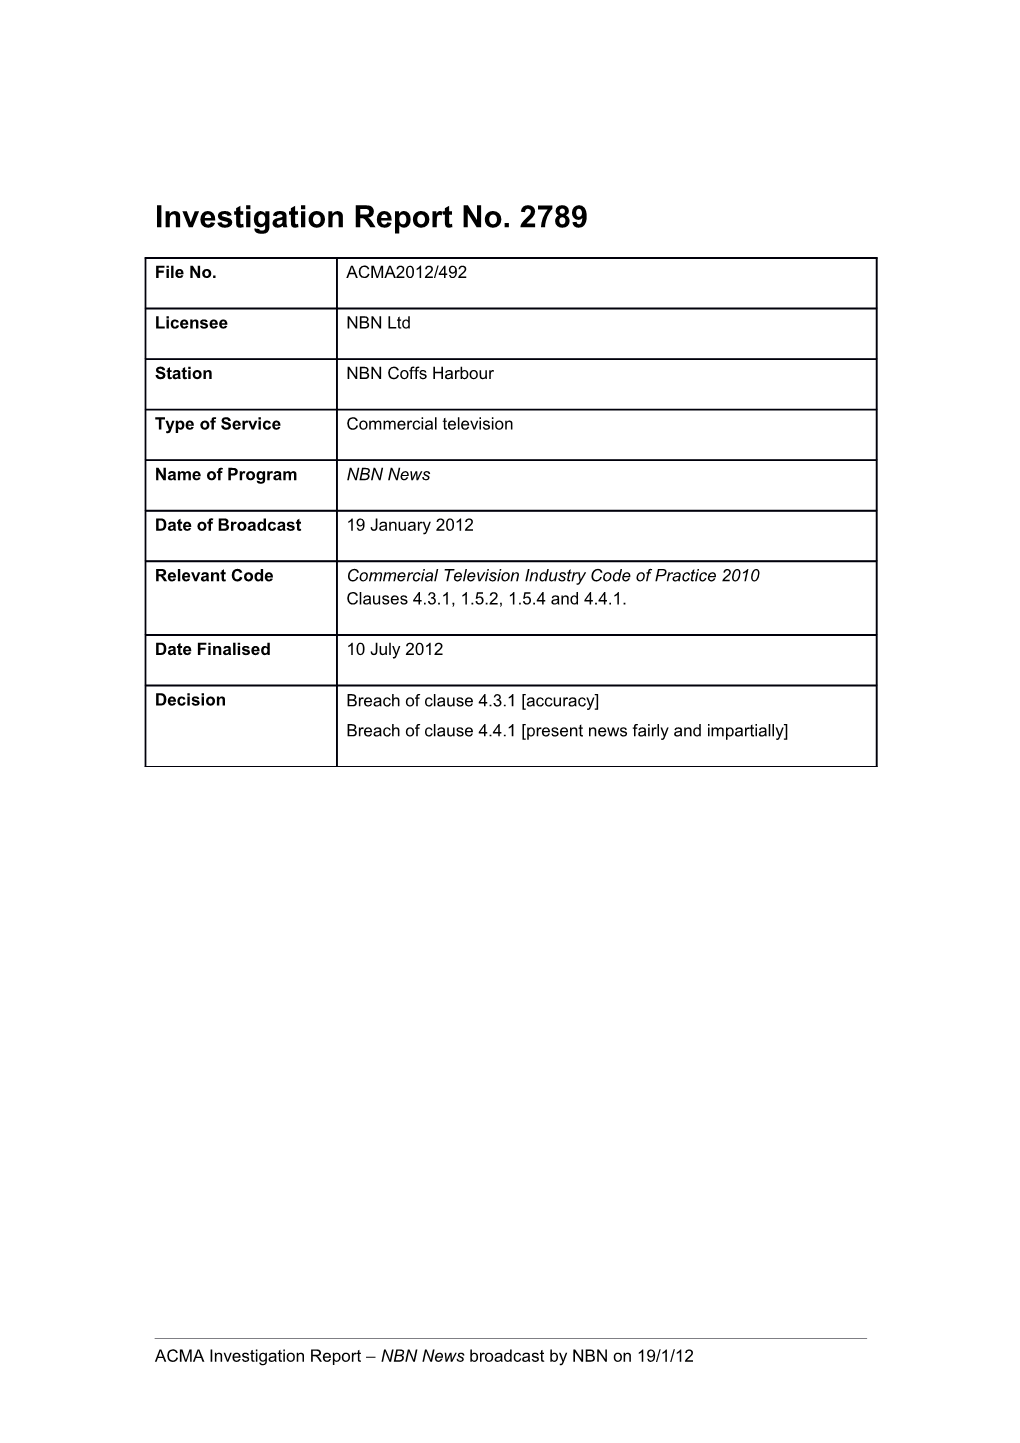 NBN - ACMA Investigation Report 2789